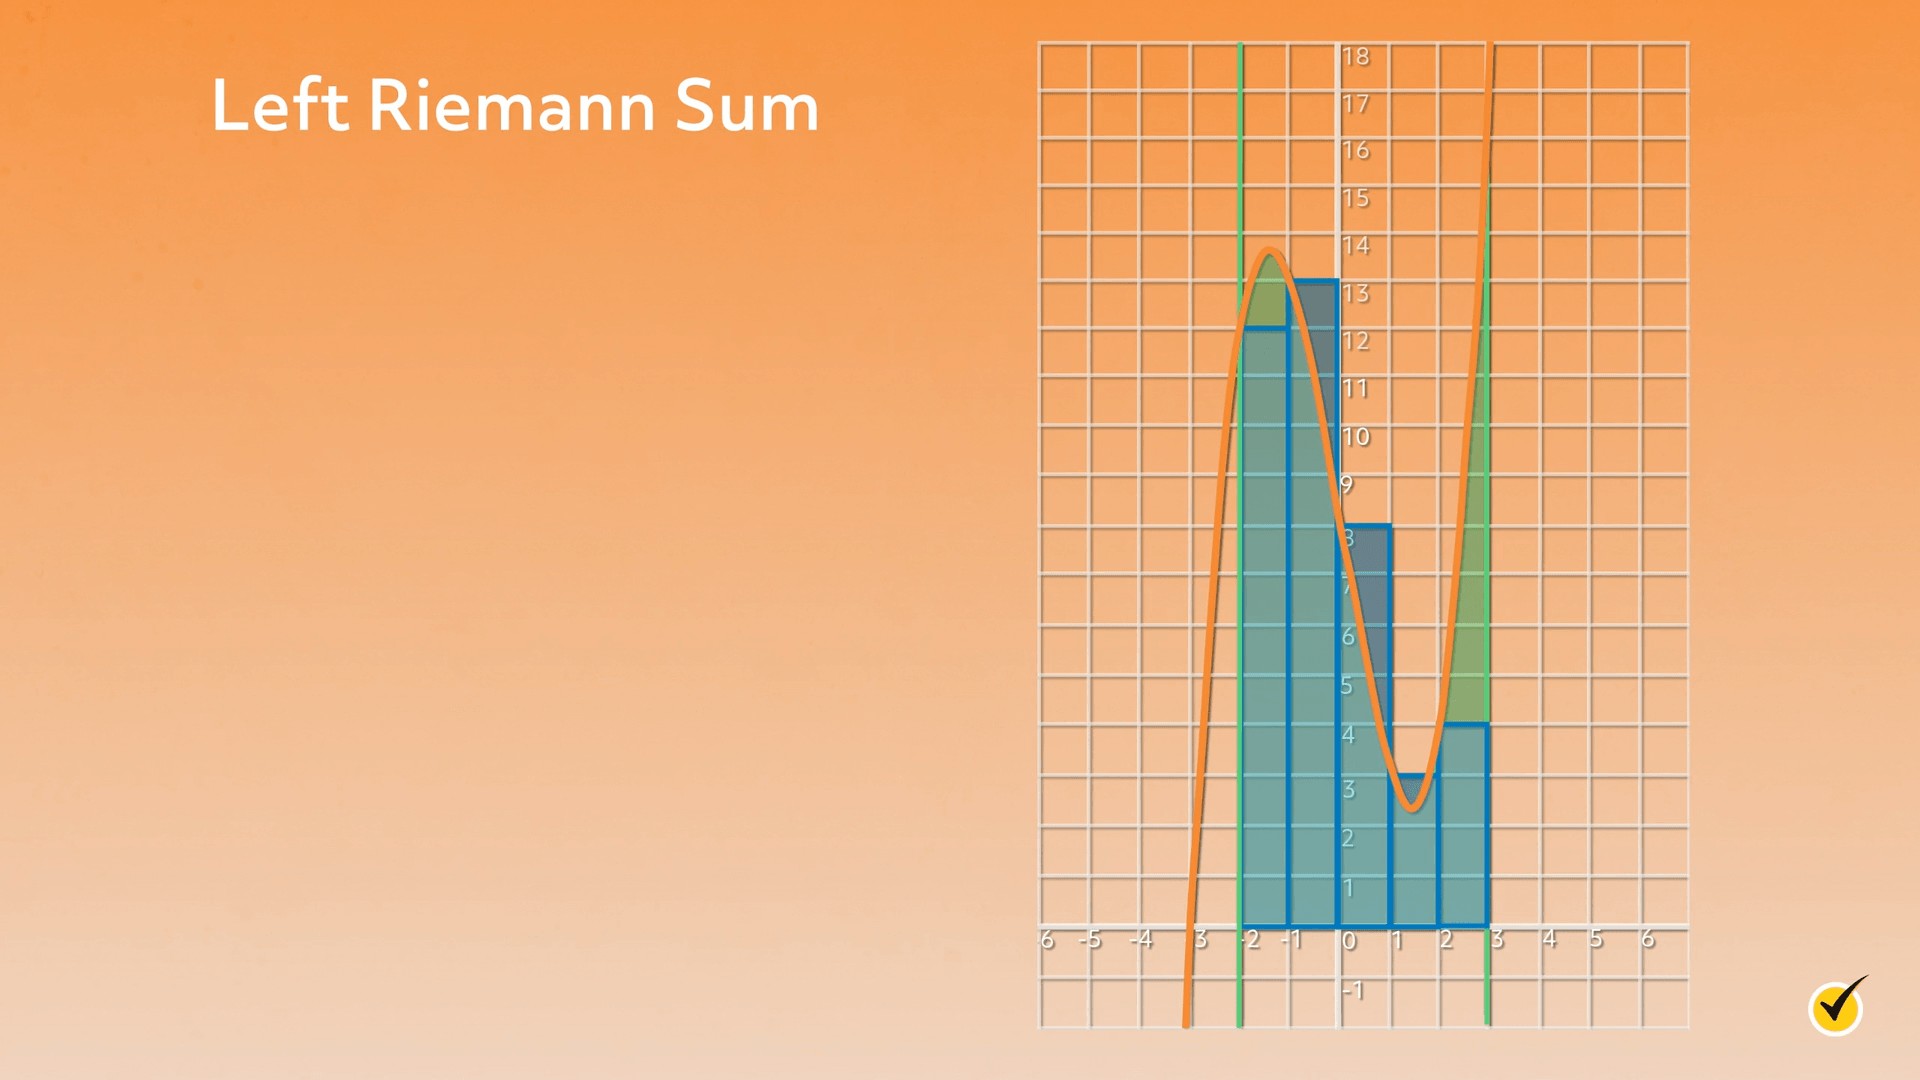 Example of a Left Riemann Sum